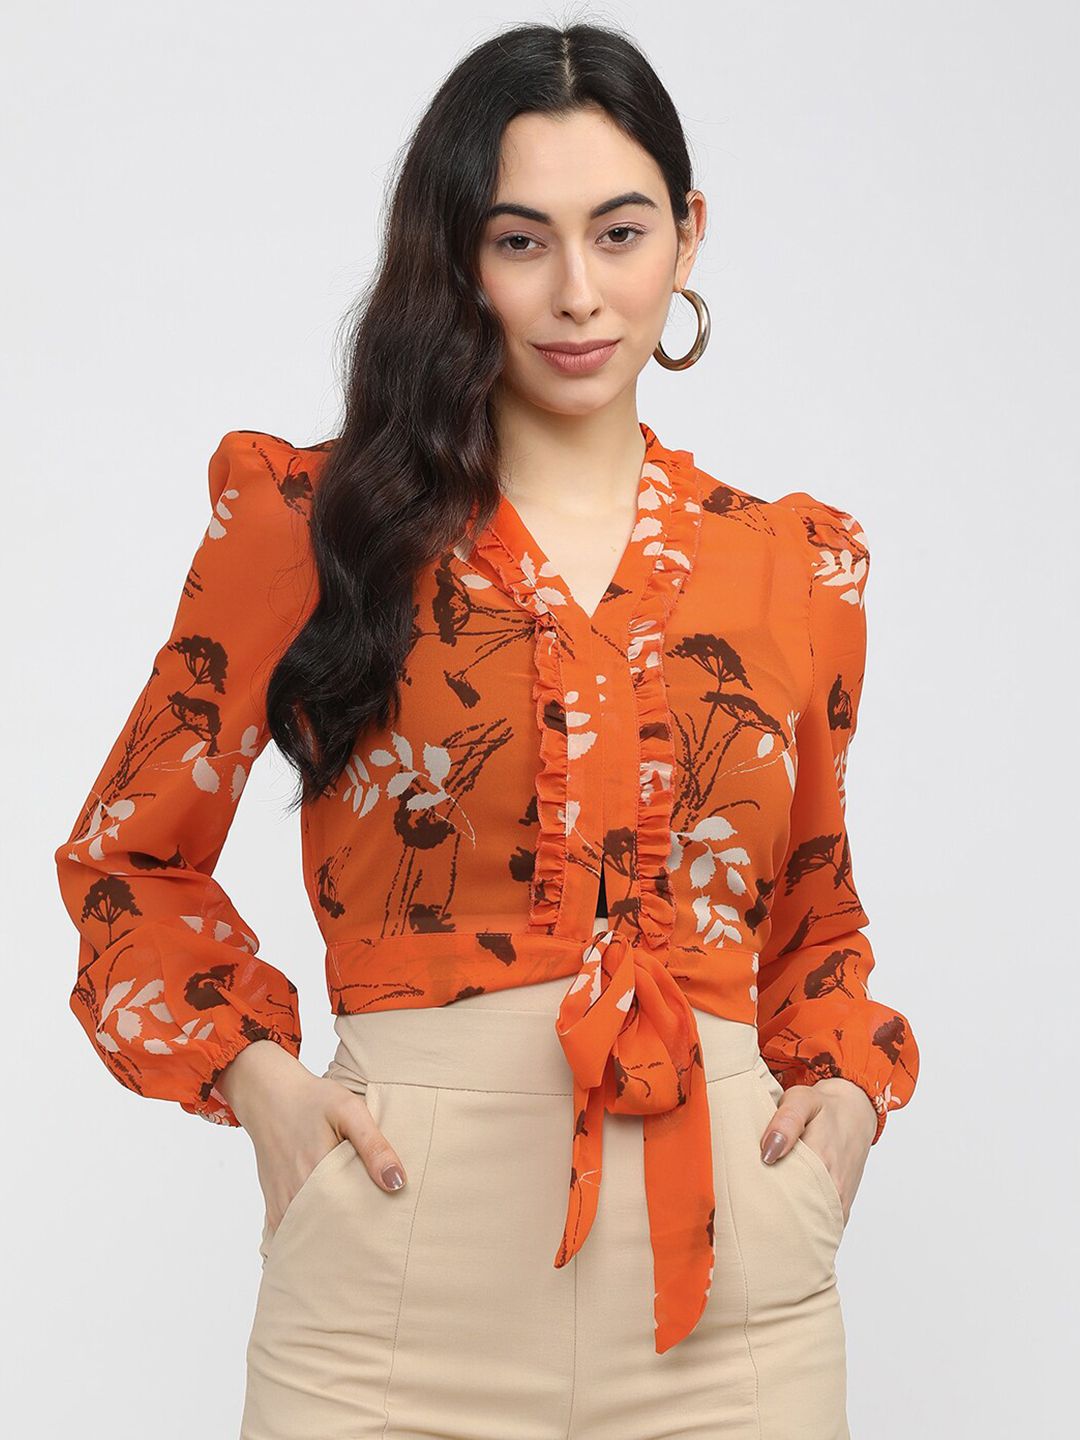 Tokyo Talkies Orange Floral Shirt Style Top Price in India